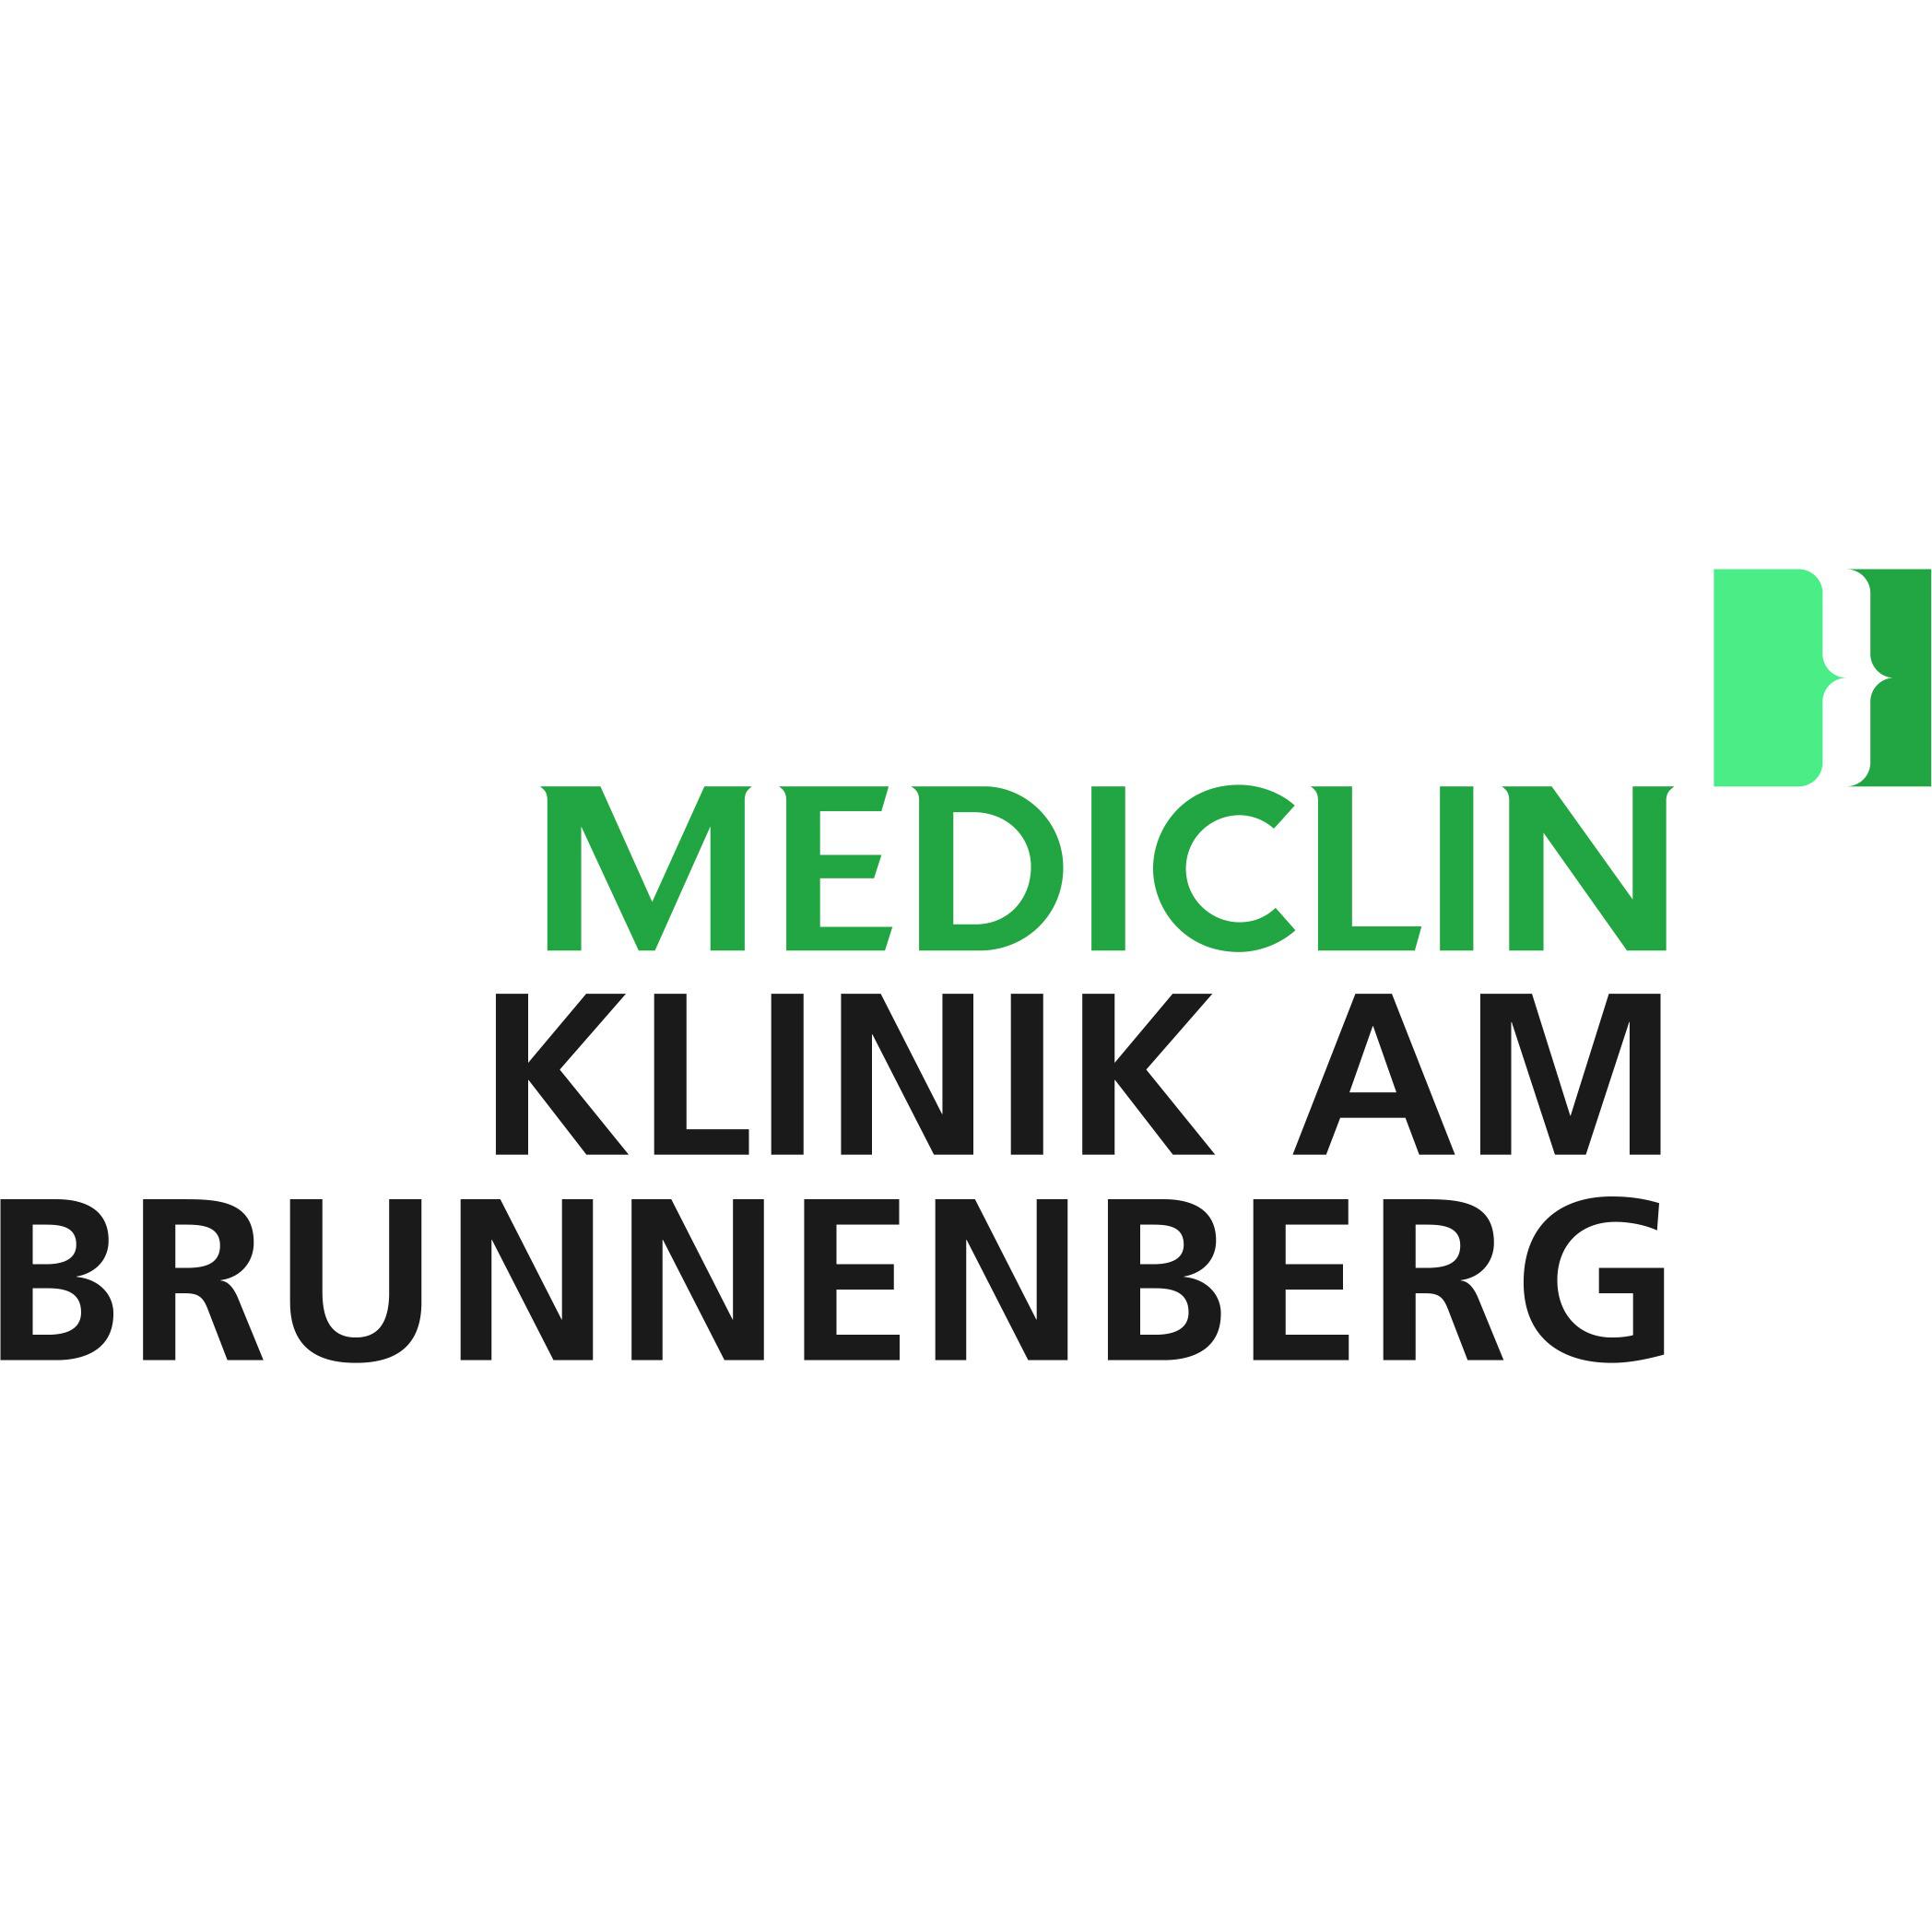 MEDICLIN Klinik am Brunnenberg in Bad Elster - Logo